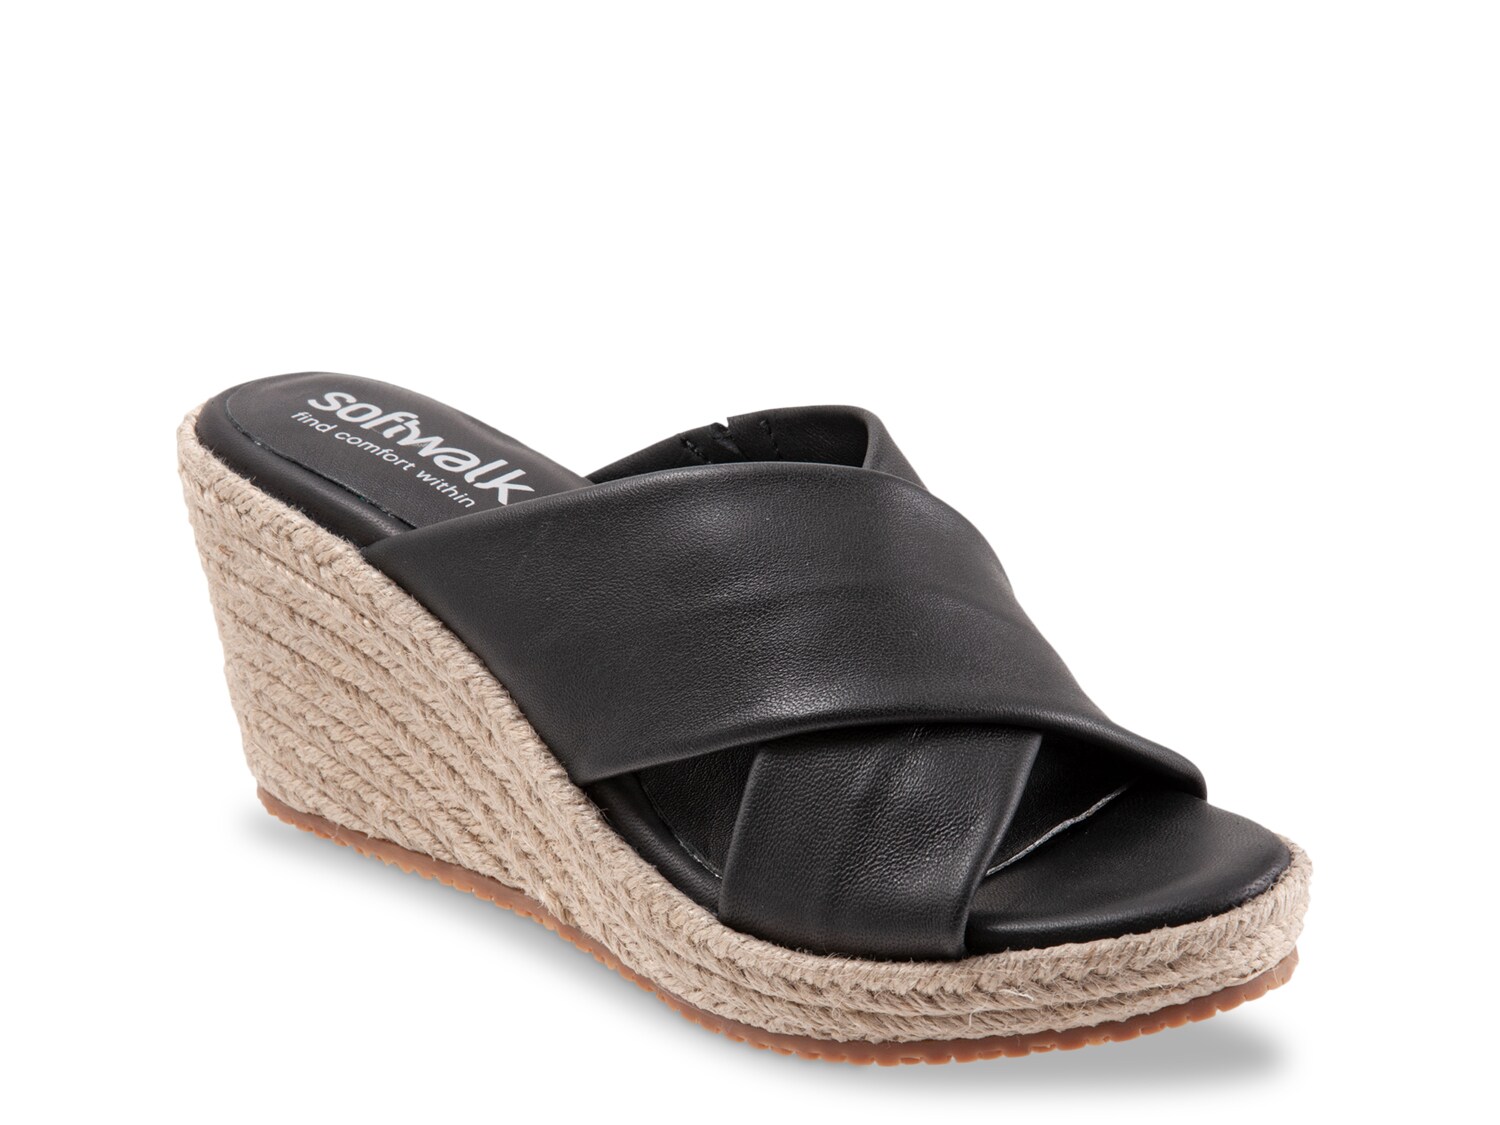 Softwalk Halsey Wedge Sandal - Free Shipping | DSW